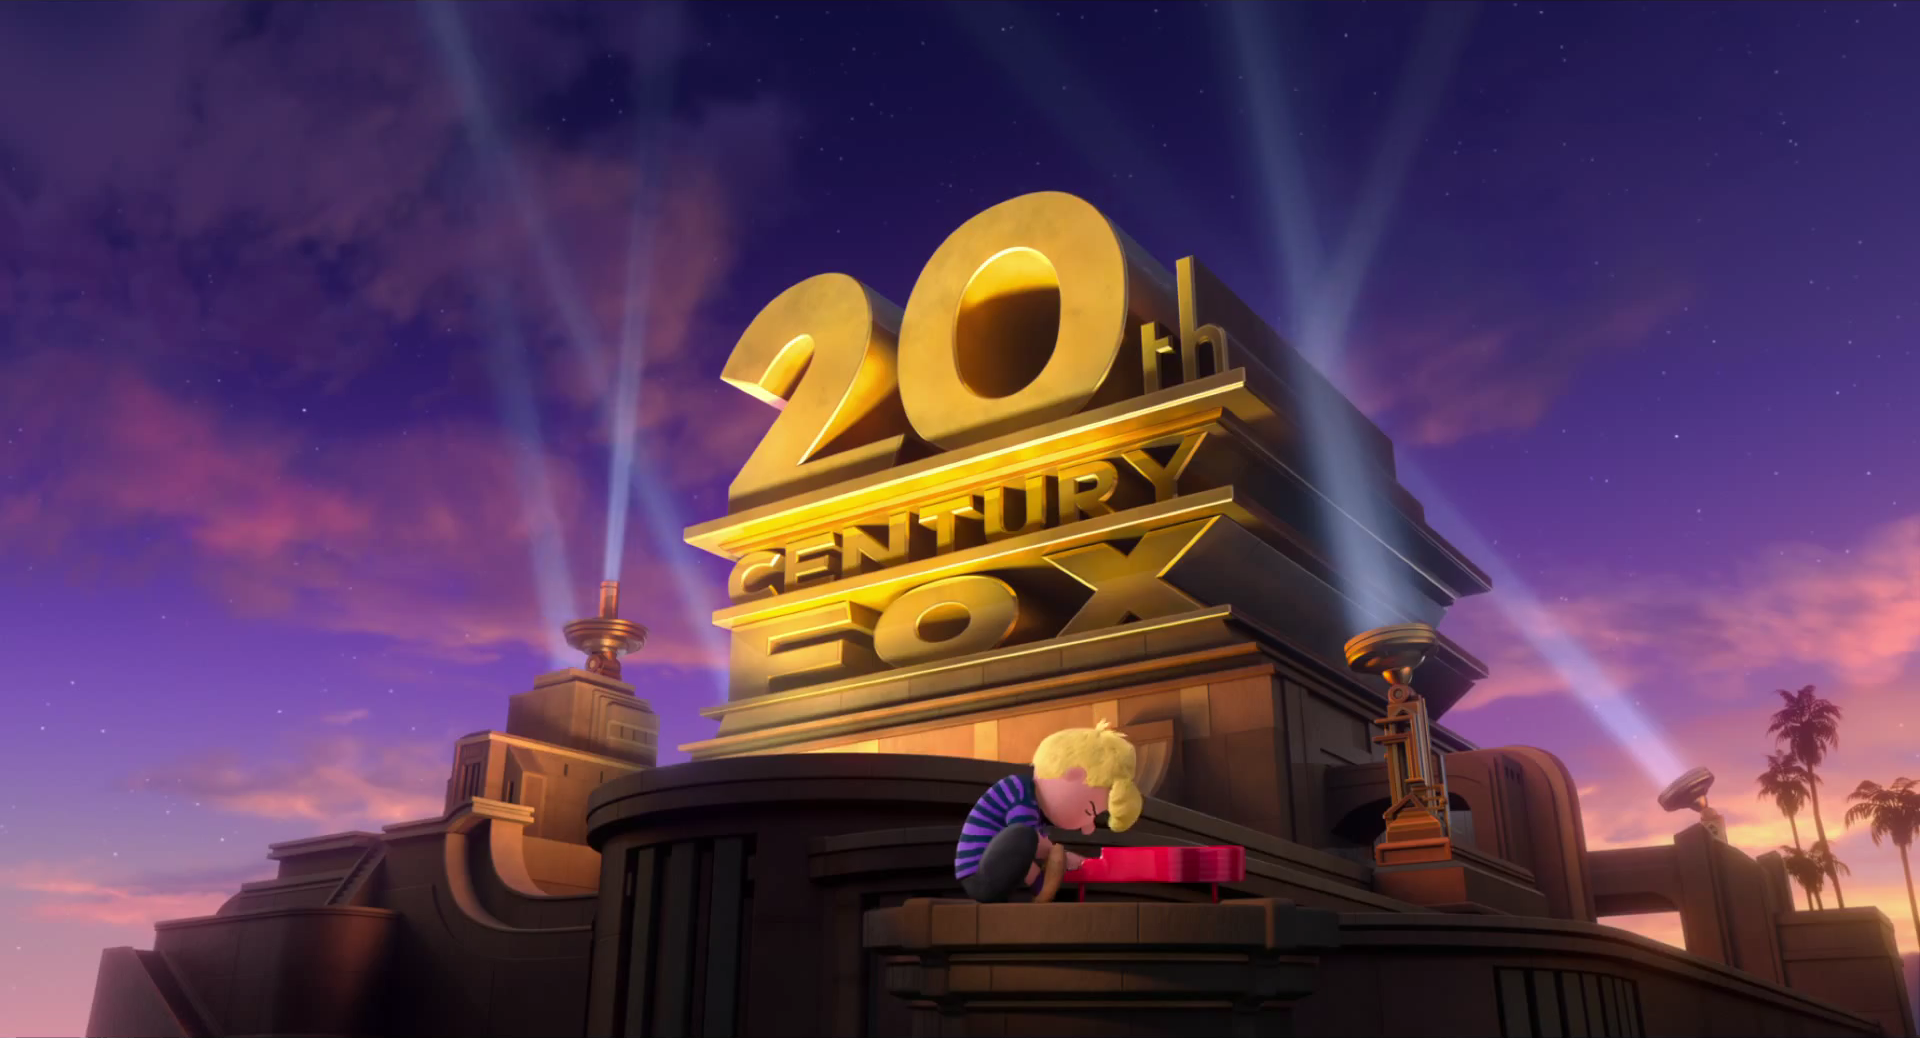 Image 20th Century Fox 2015 The Peanuts Movie Variantpng